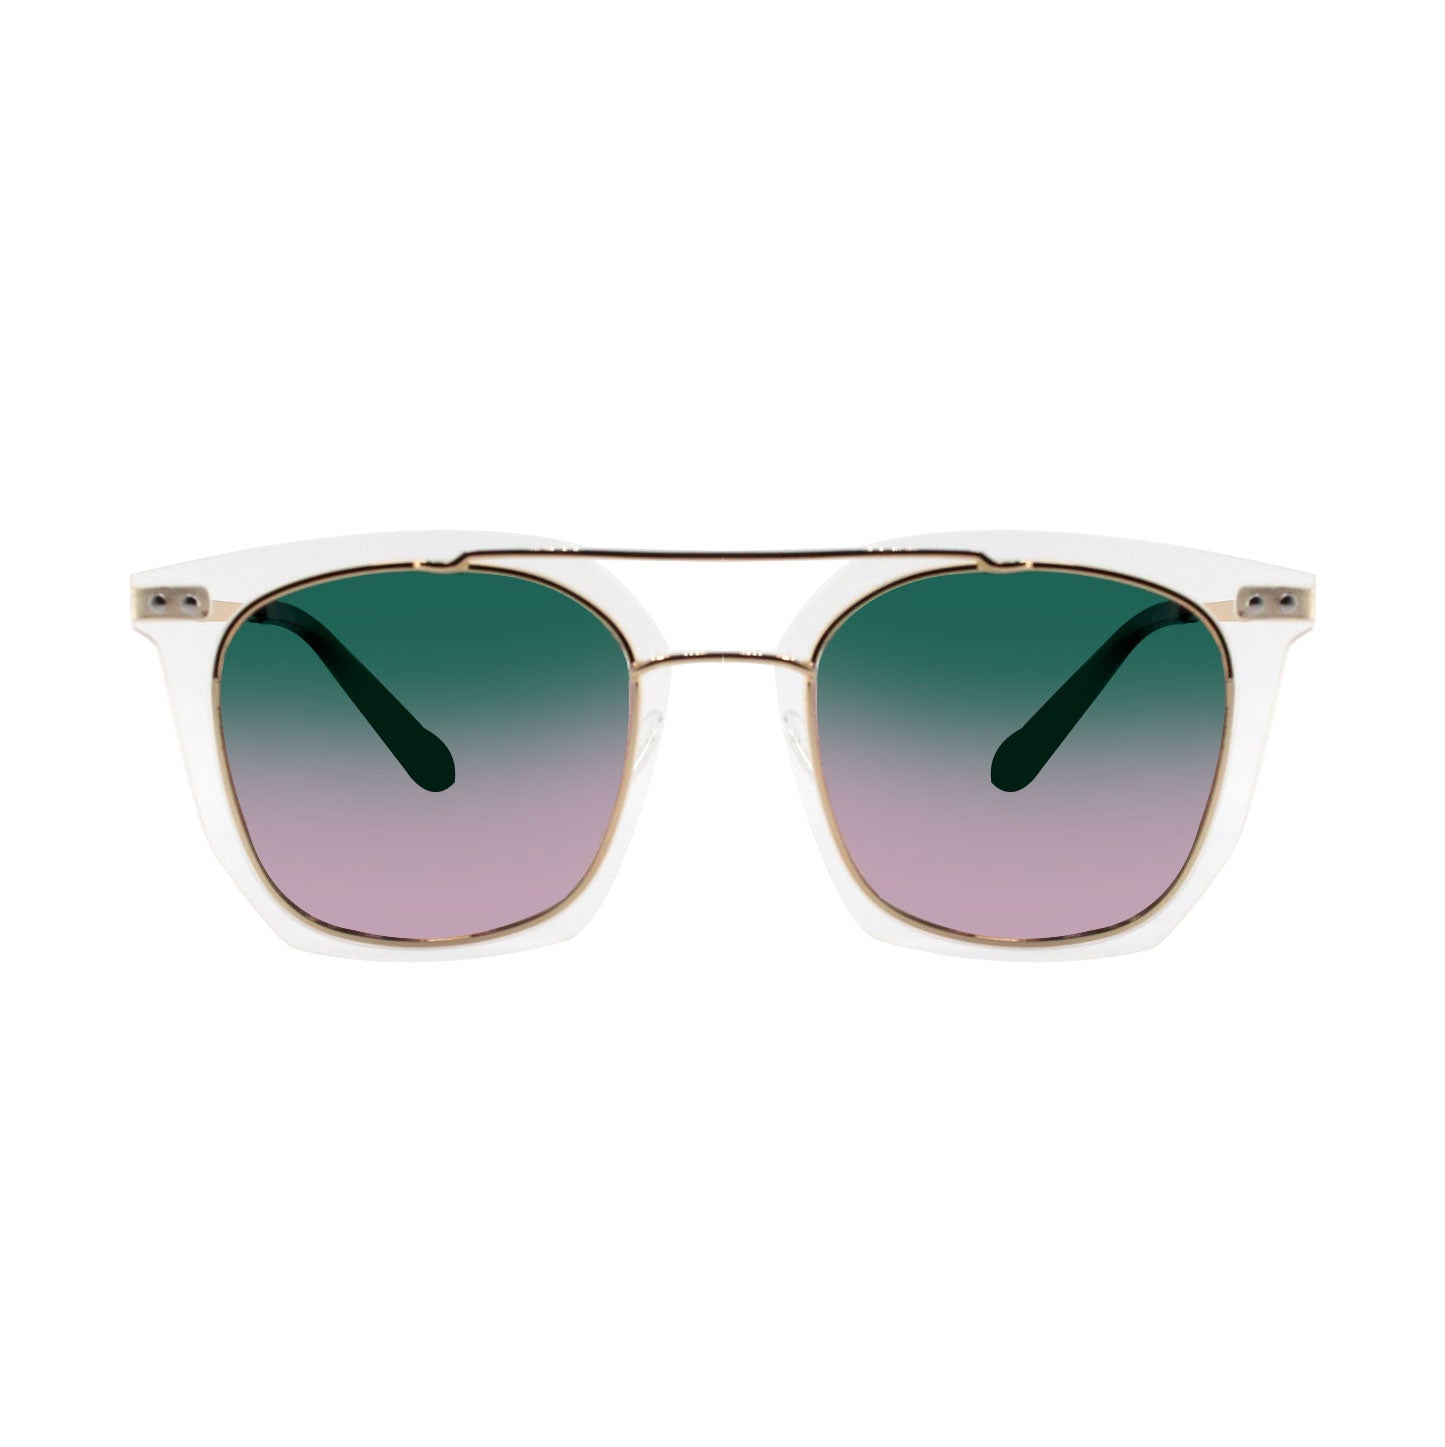 Shades X - Polarized Sunglasses | Model 7033